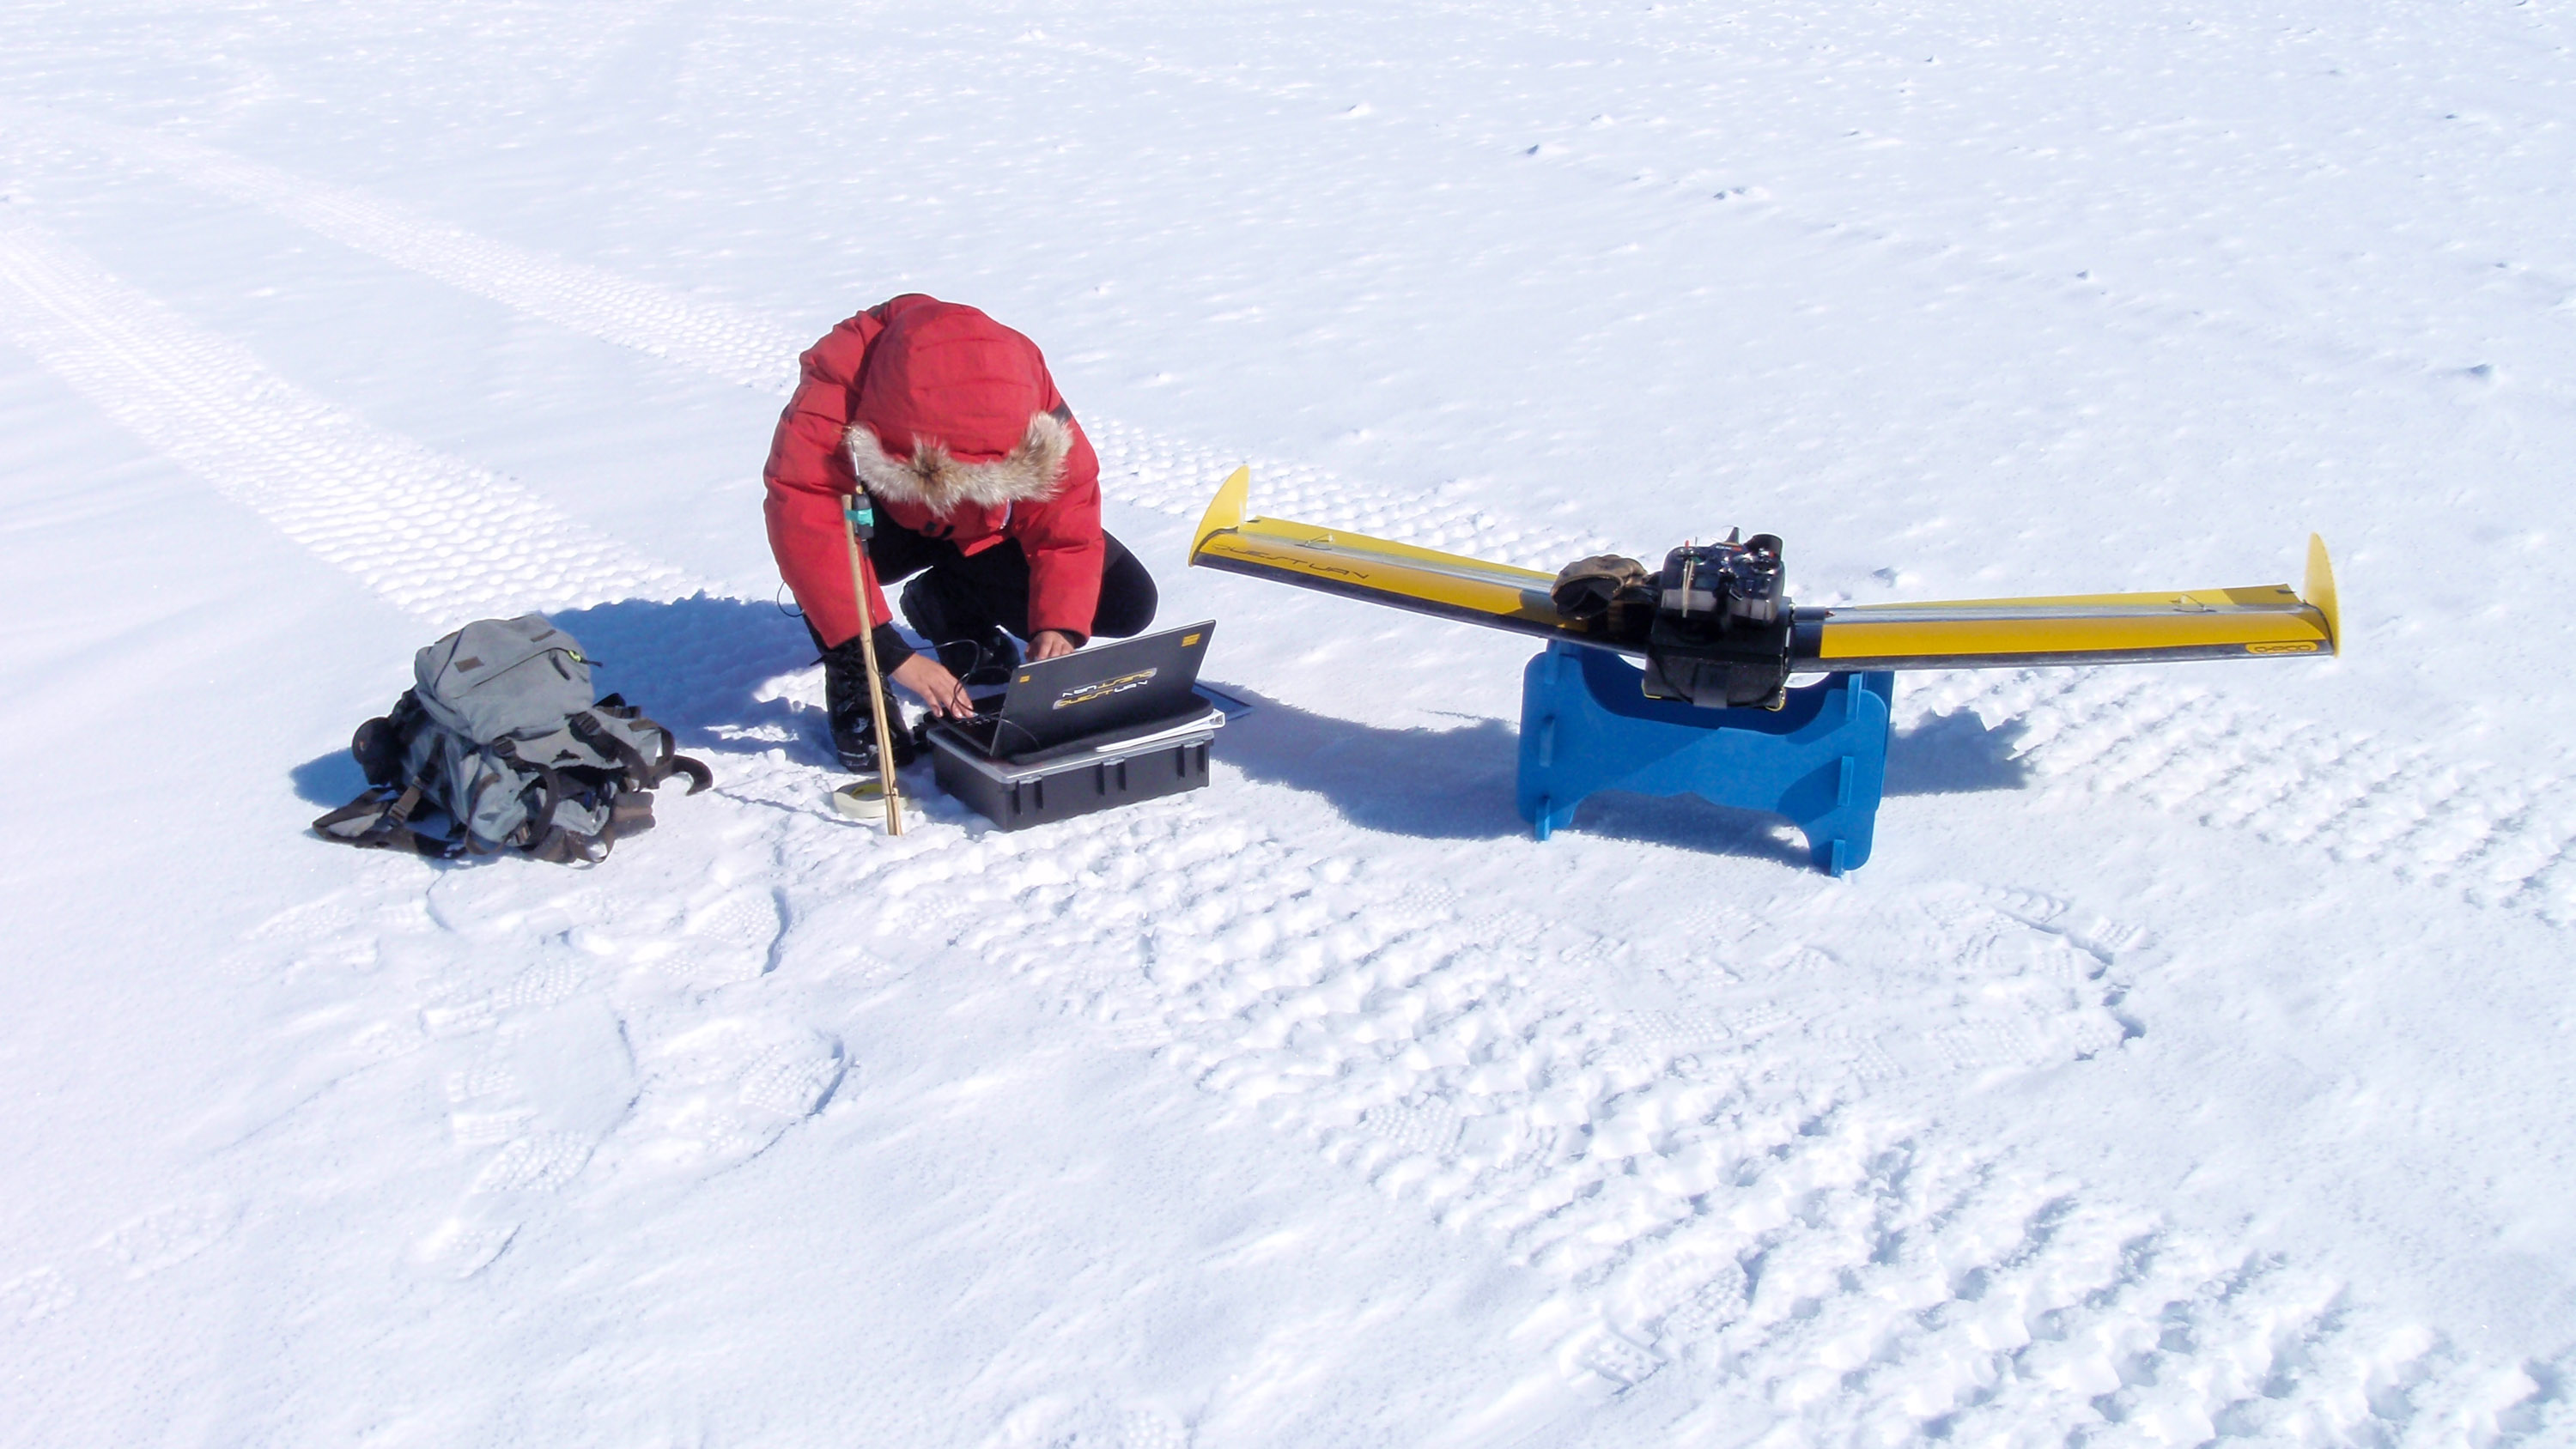 Millstein sitting in the snow assembling equipment